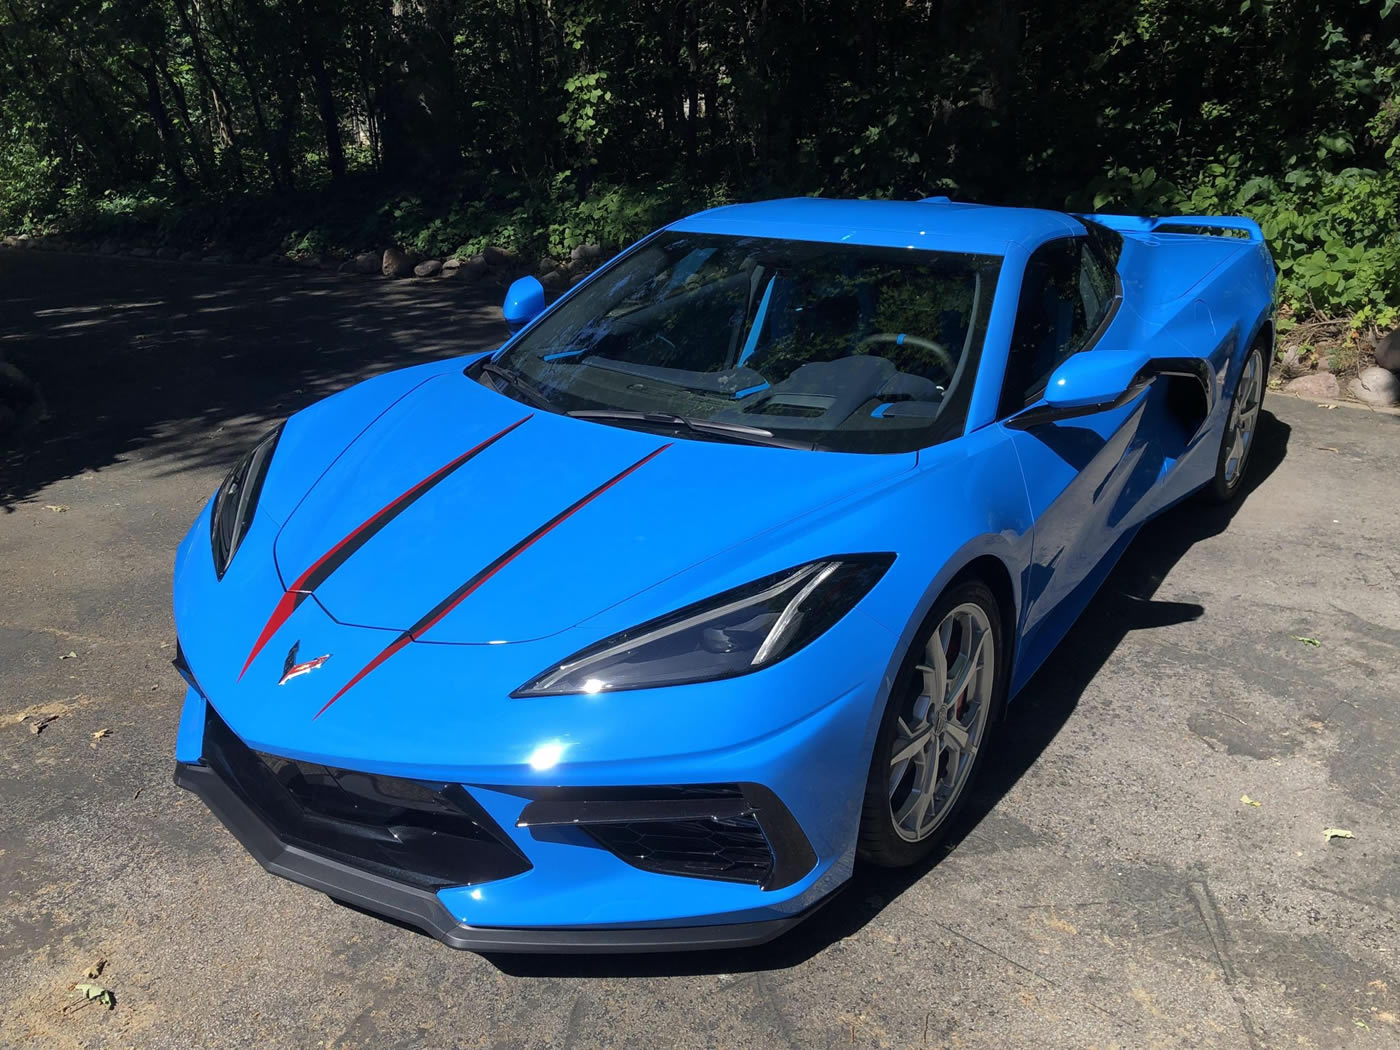 2022 Corvette Stingray Convertible in Rapid Blue